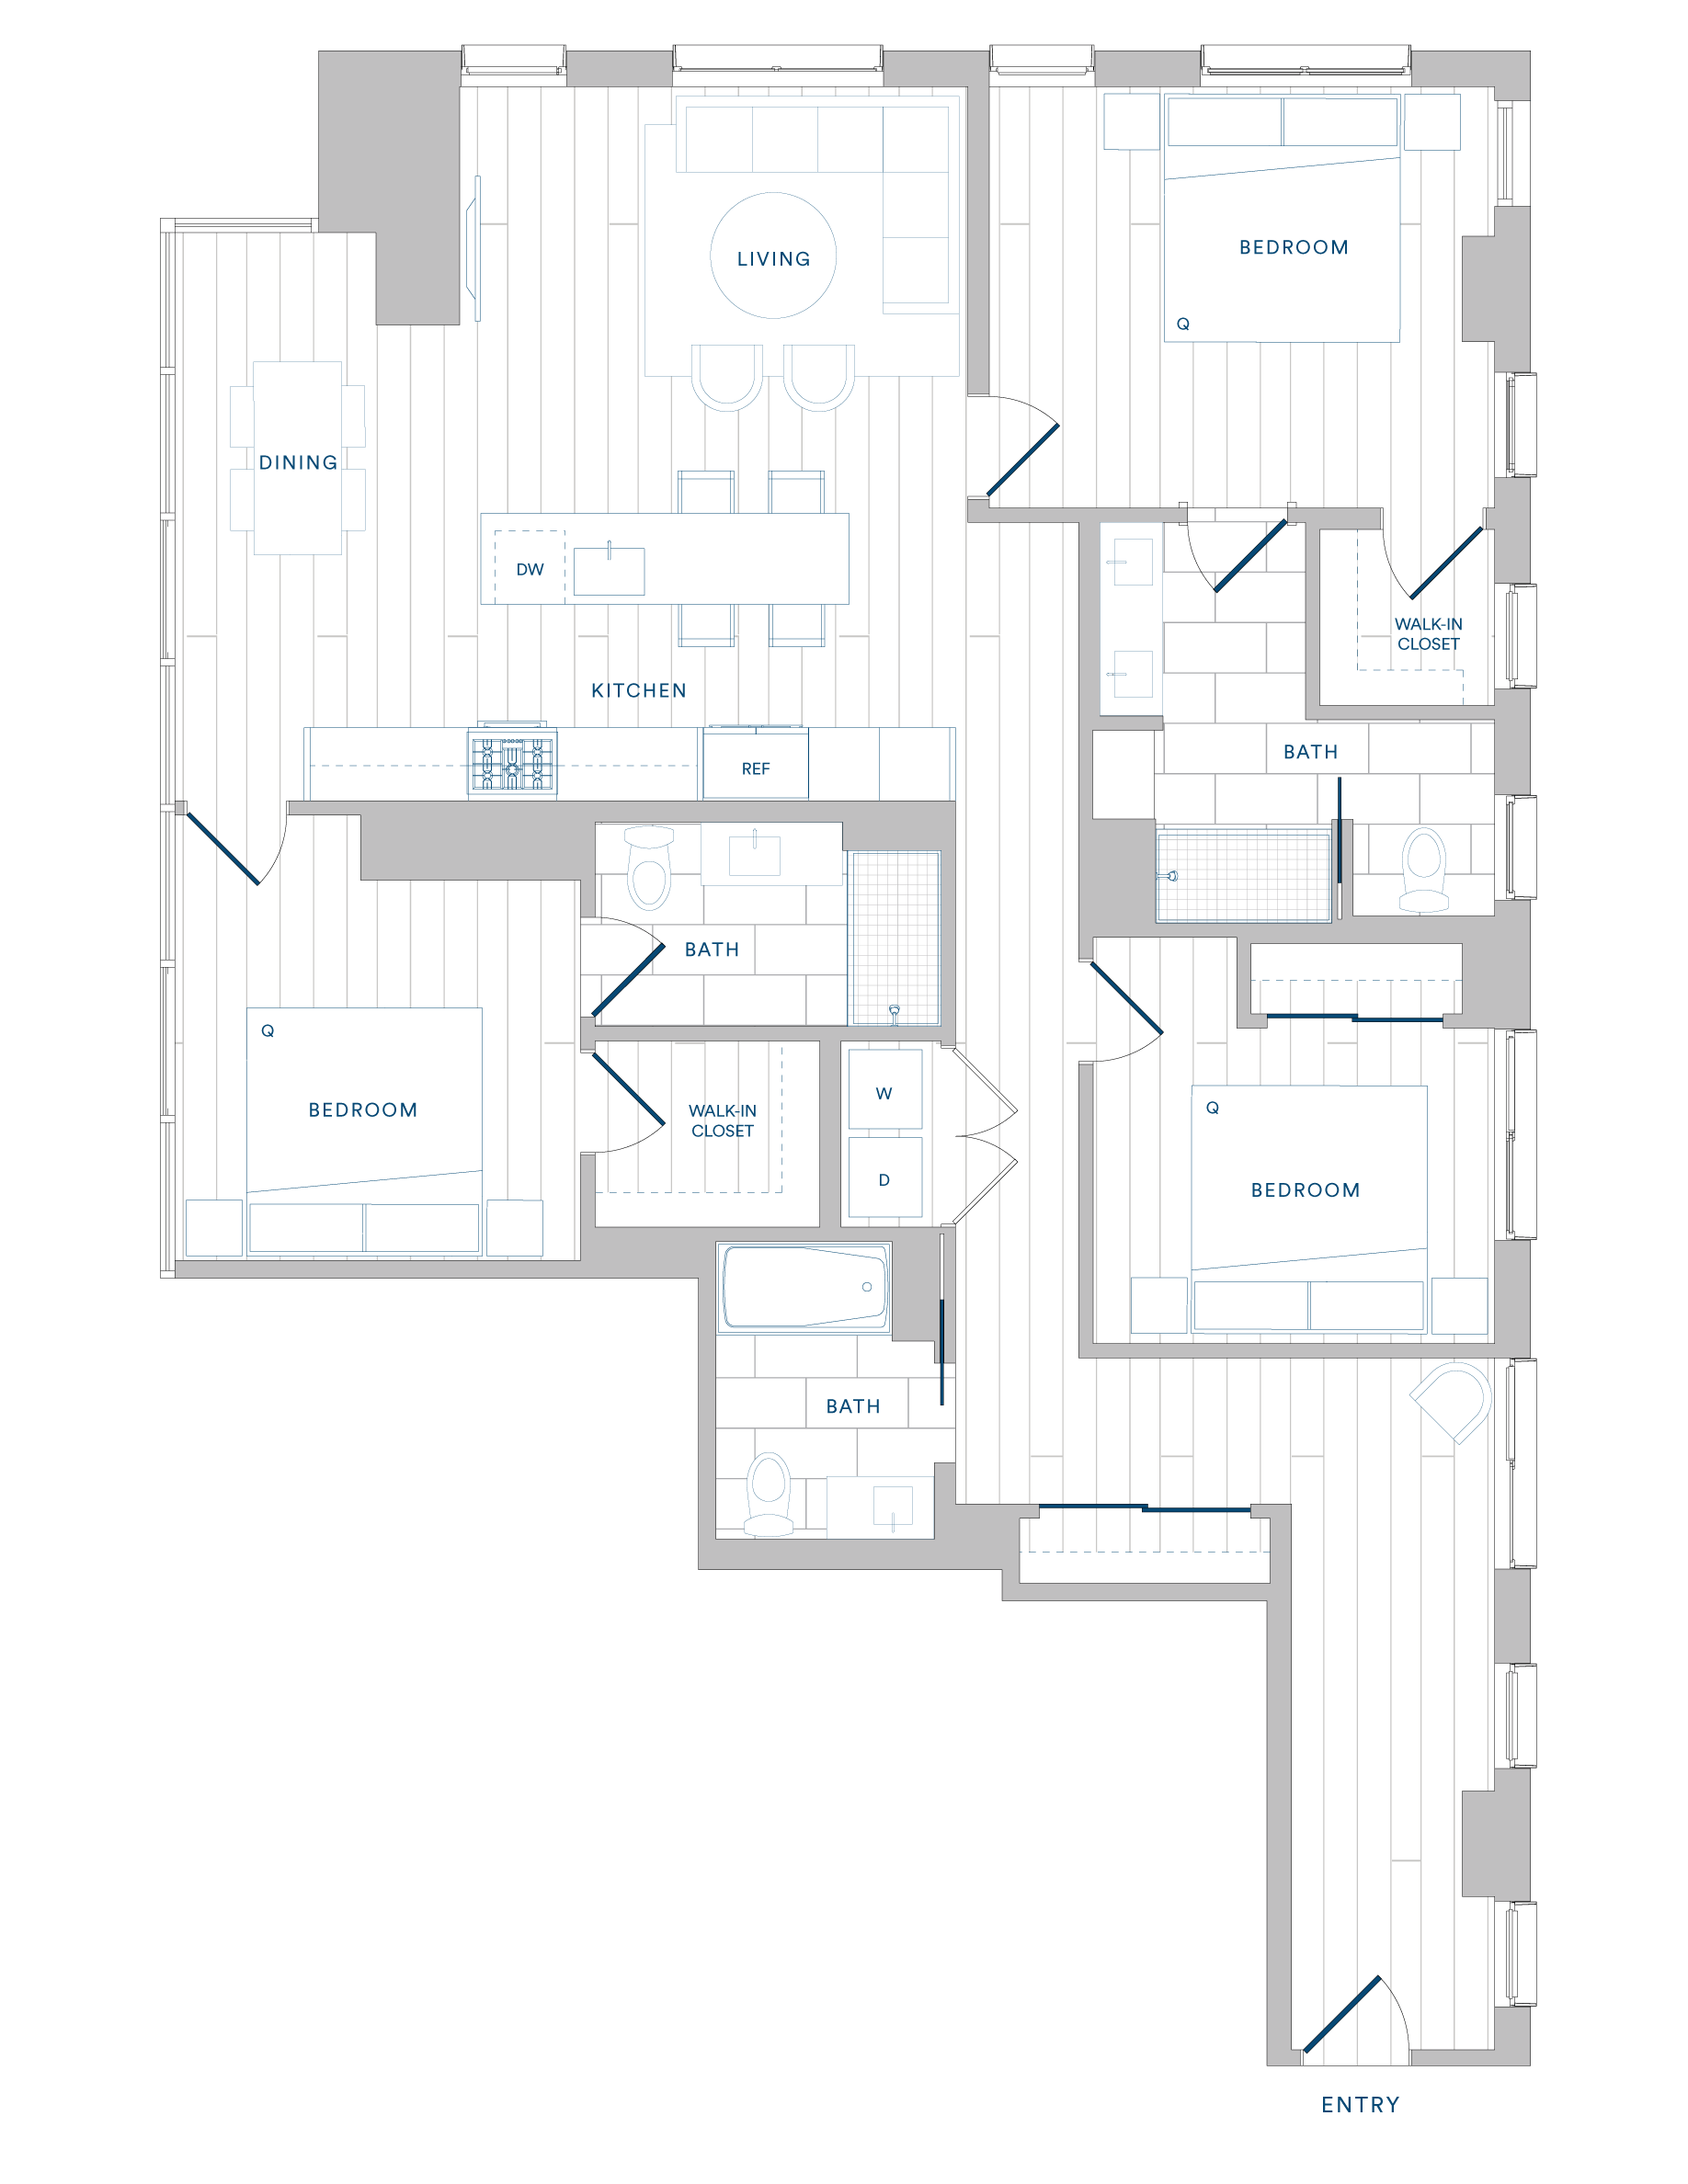 Floorplan for Apartment #623, 3 bedroom unit at Margarite